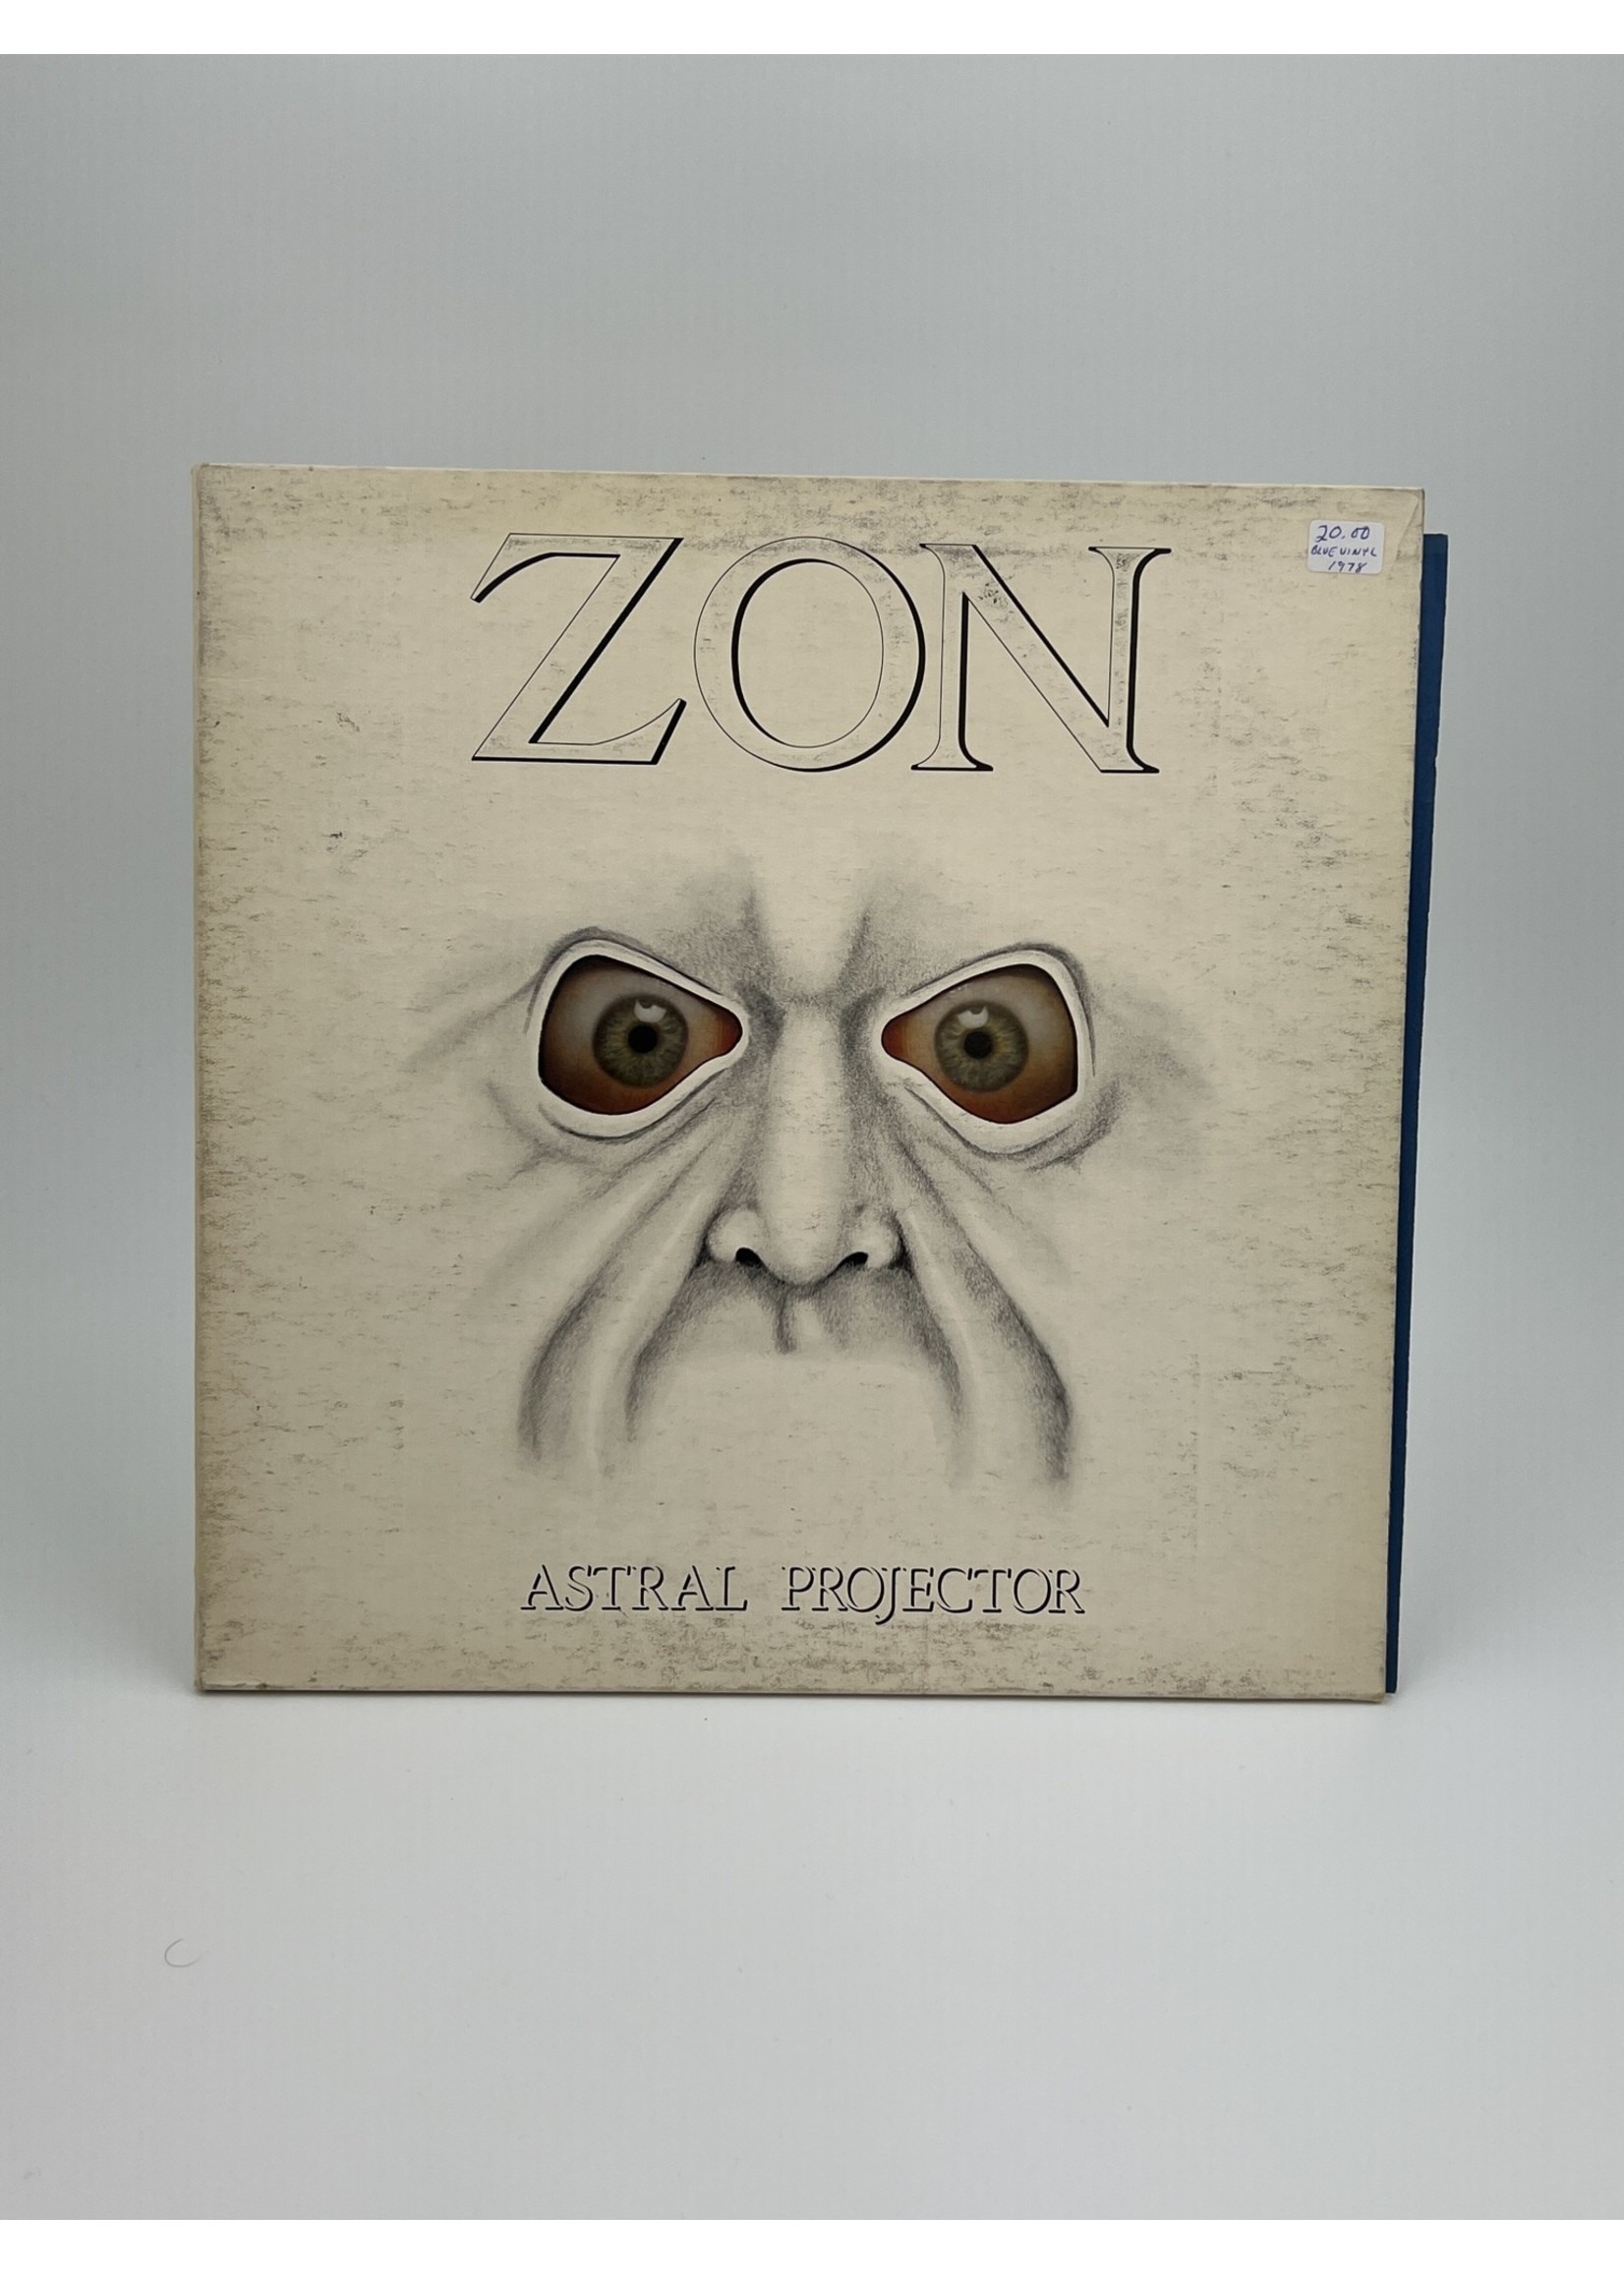 LP Zon Astral Projector Blue Vinyl LP Record